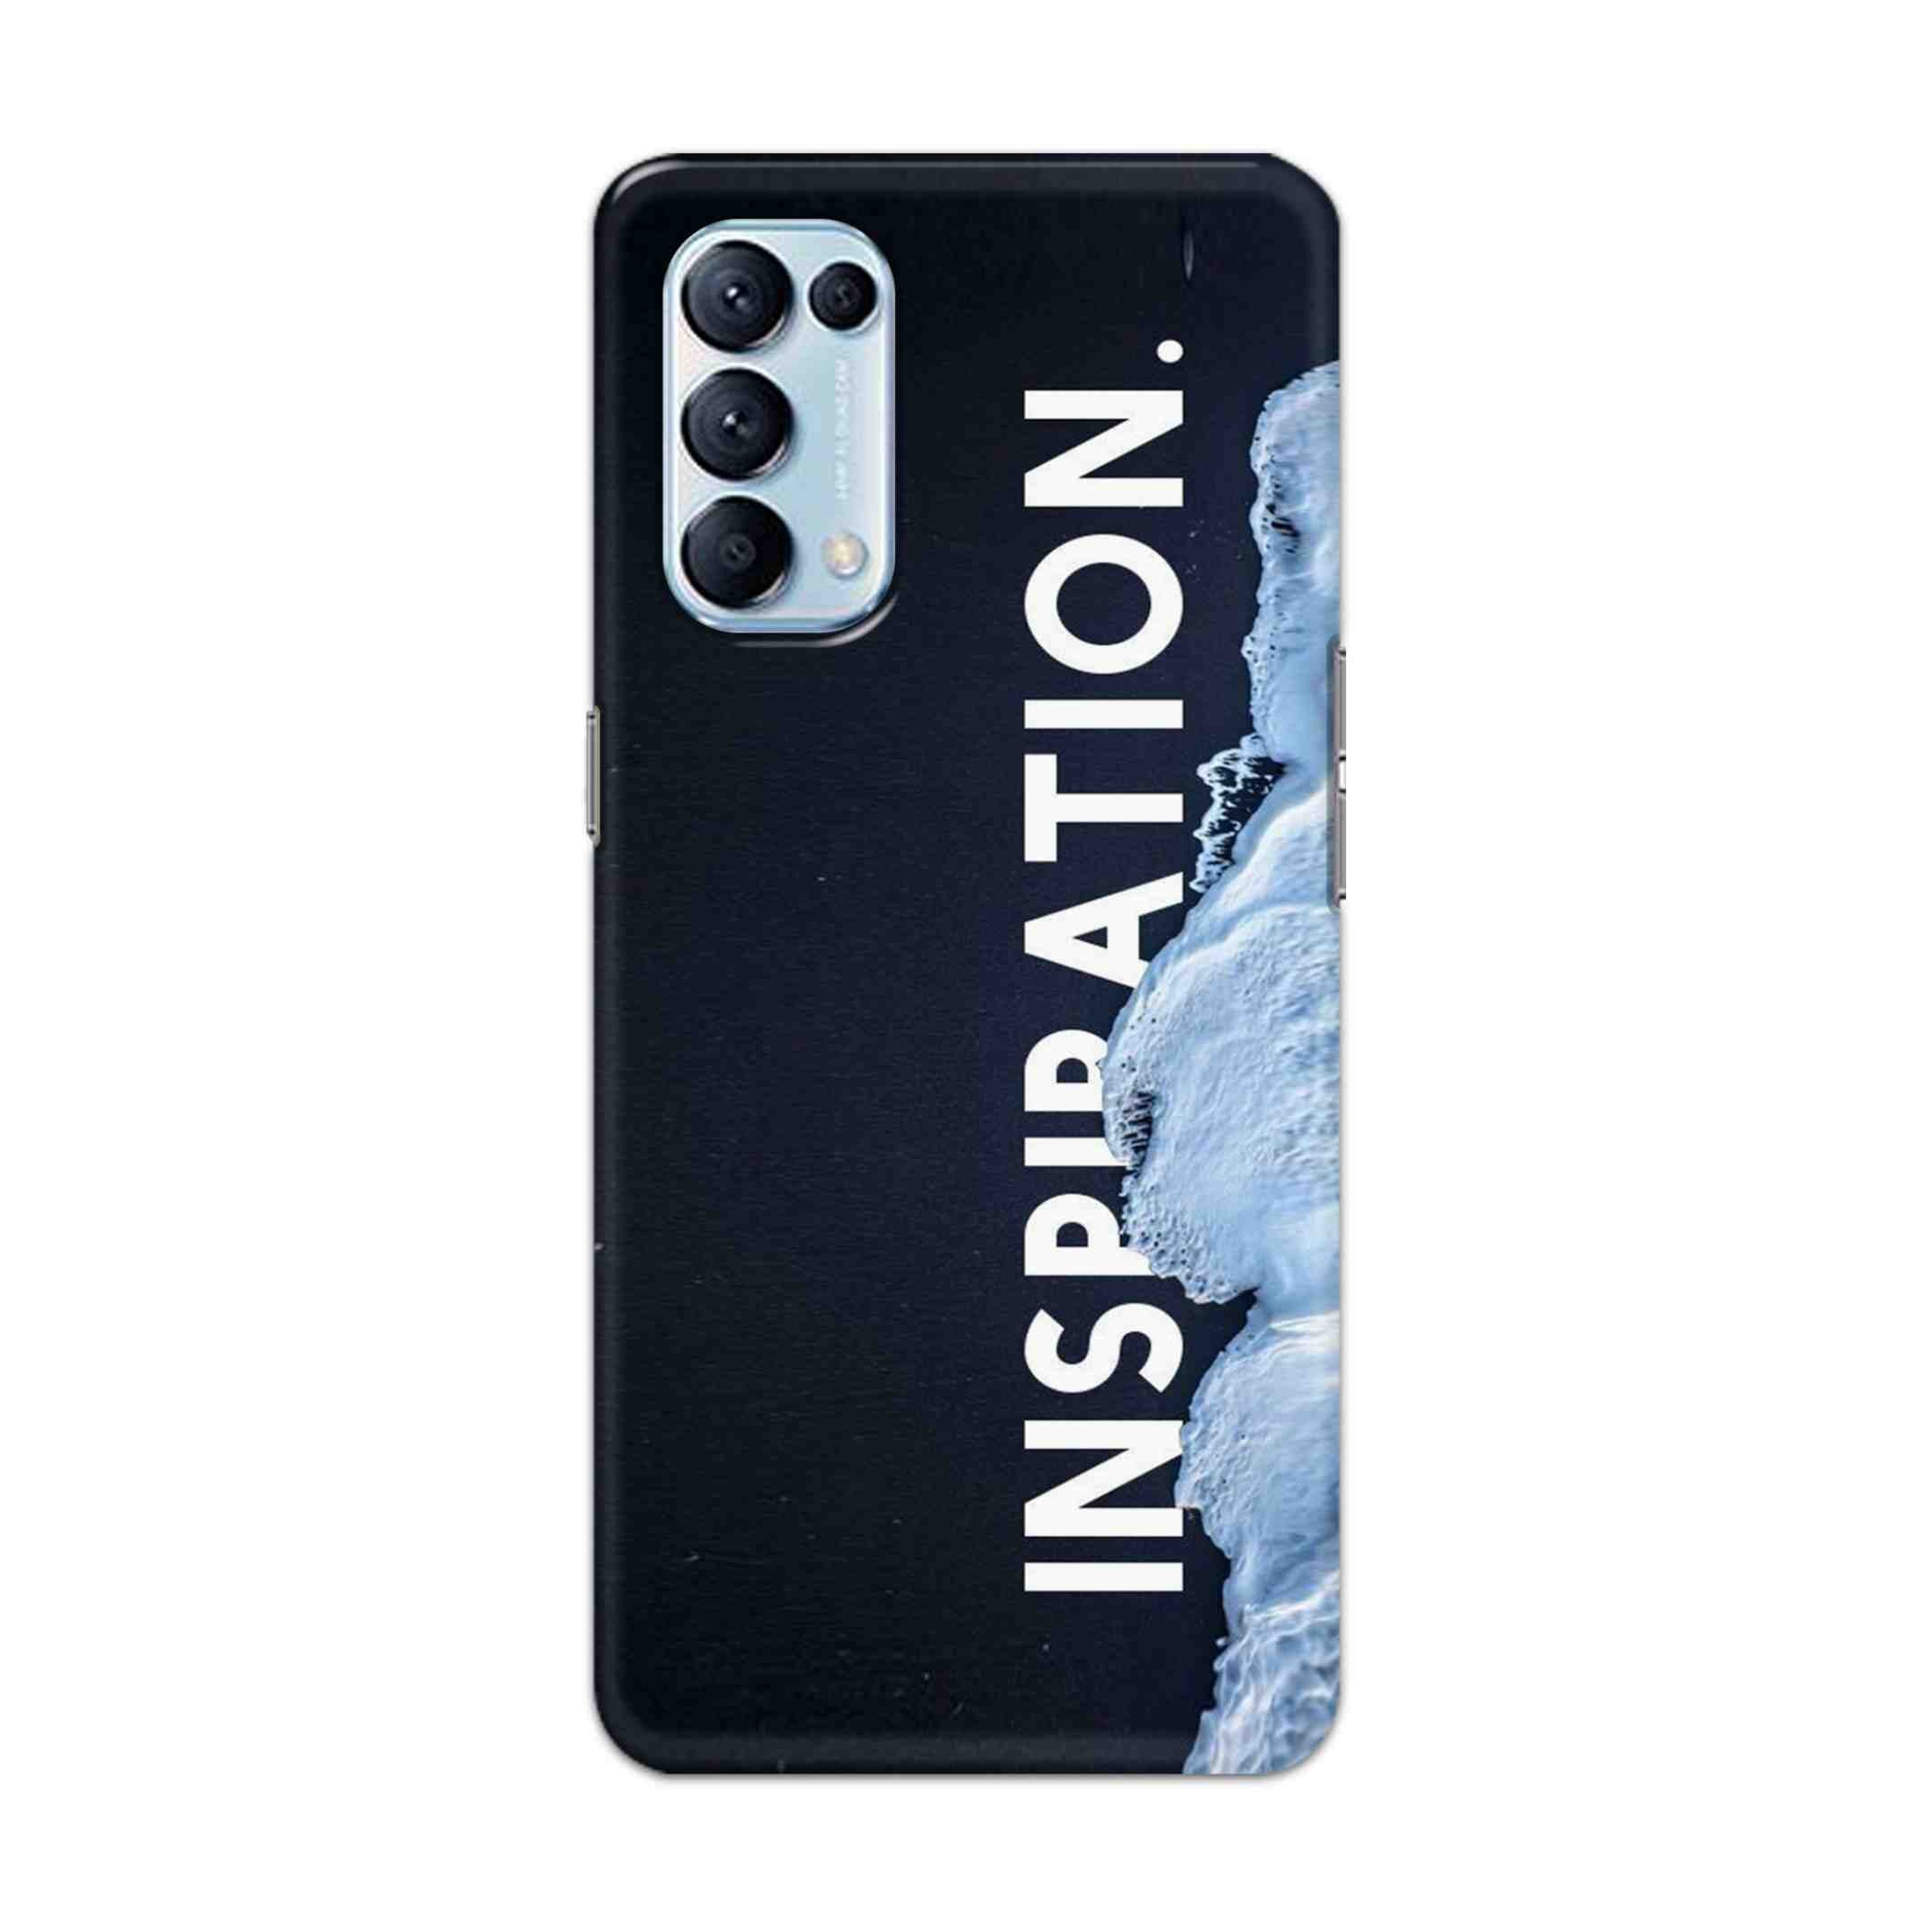 Buy Inspiration Hard Back Mobile Phone Case Cover For Oppo Reno 5 Pro 5G Online